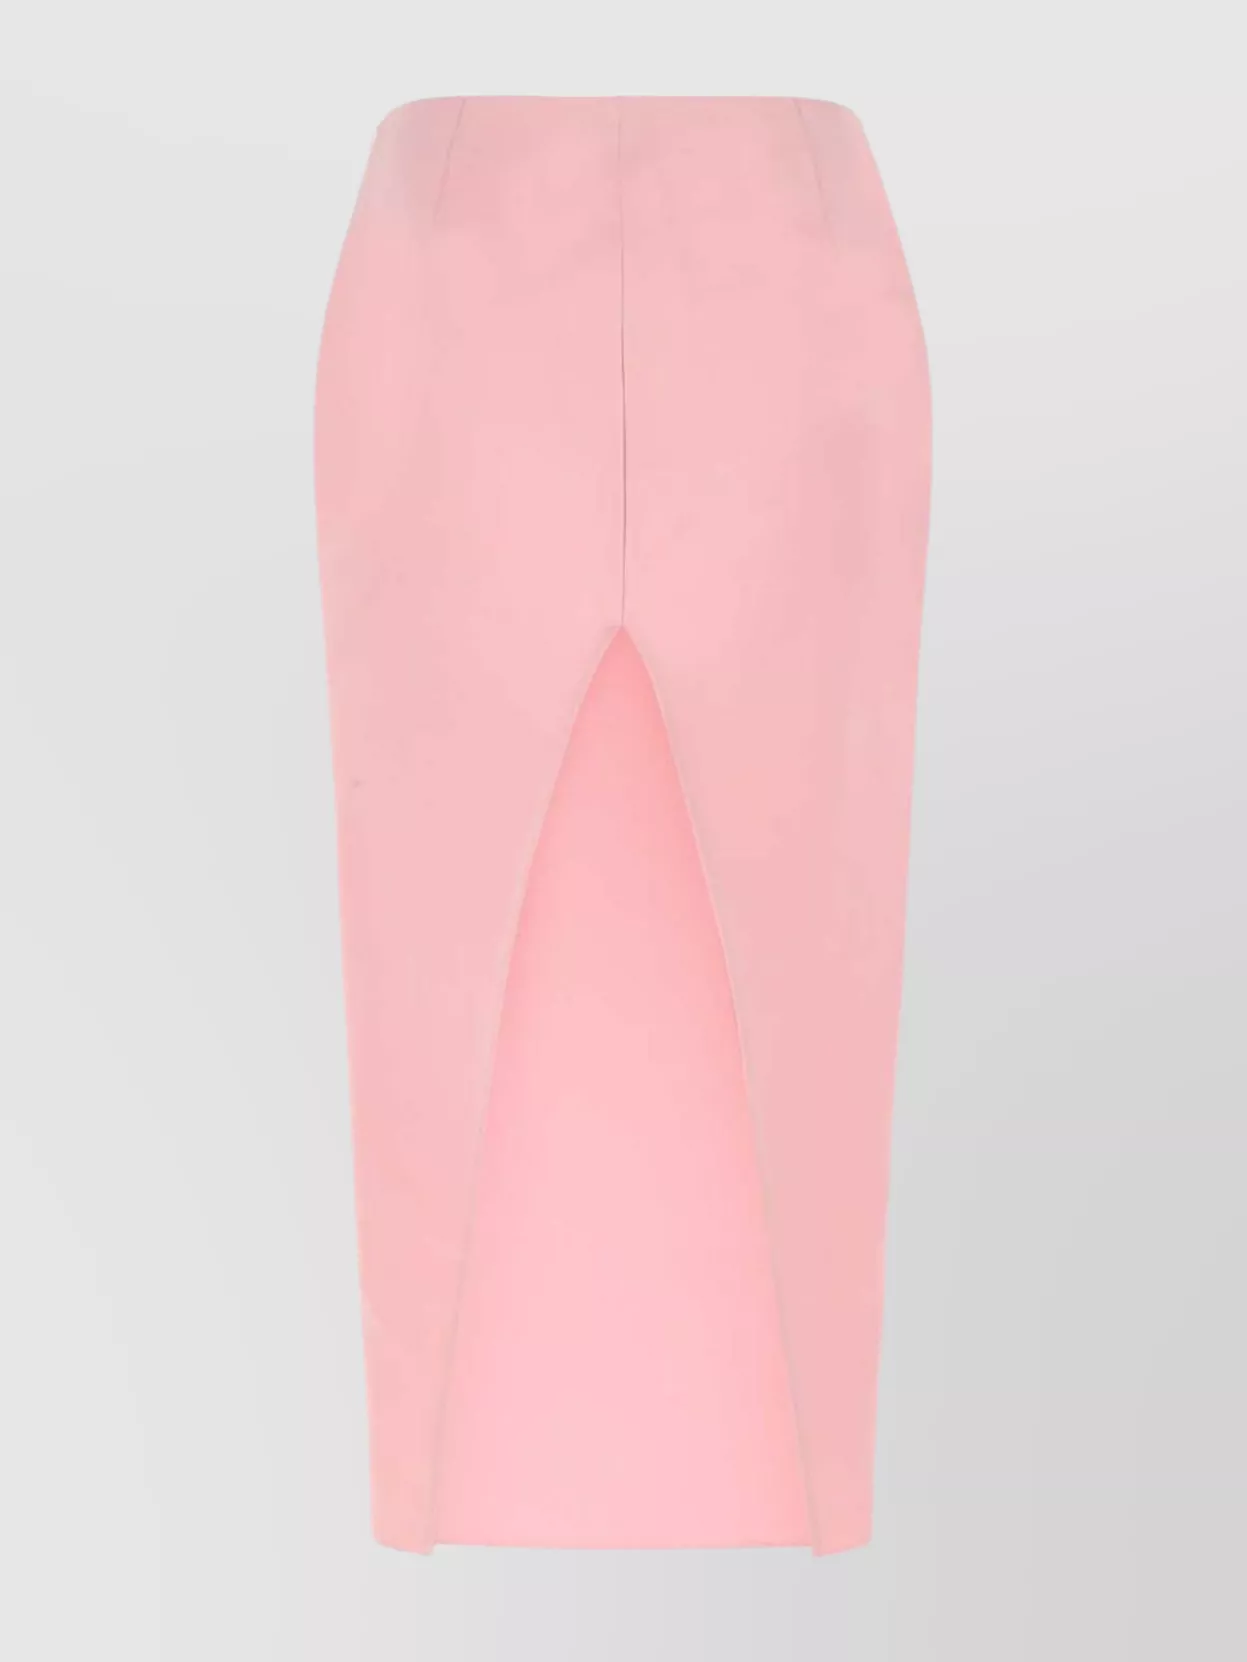 Prada Skirt Satin Back Slit High Waist Pencil Silhouette In Pink